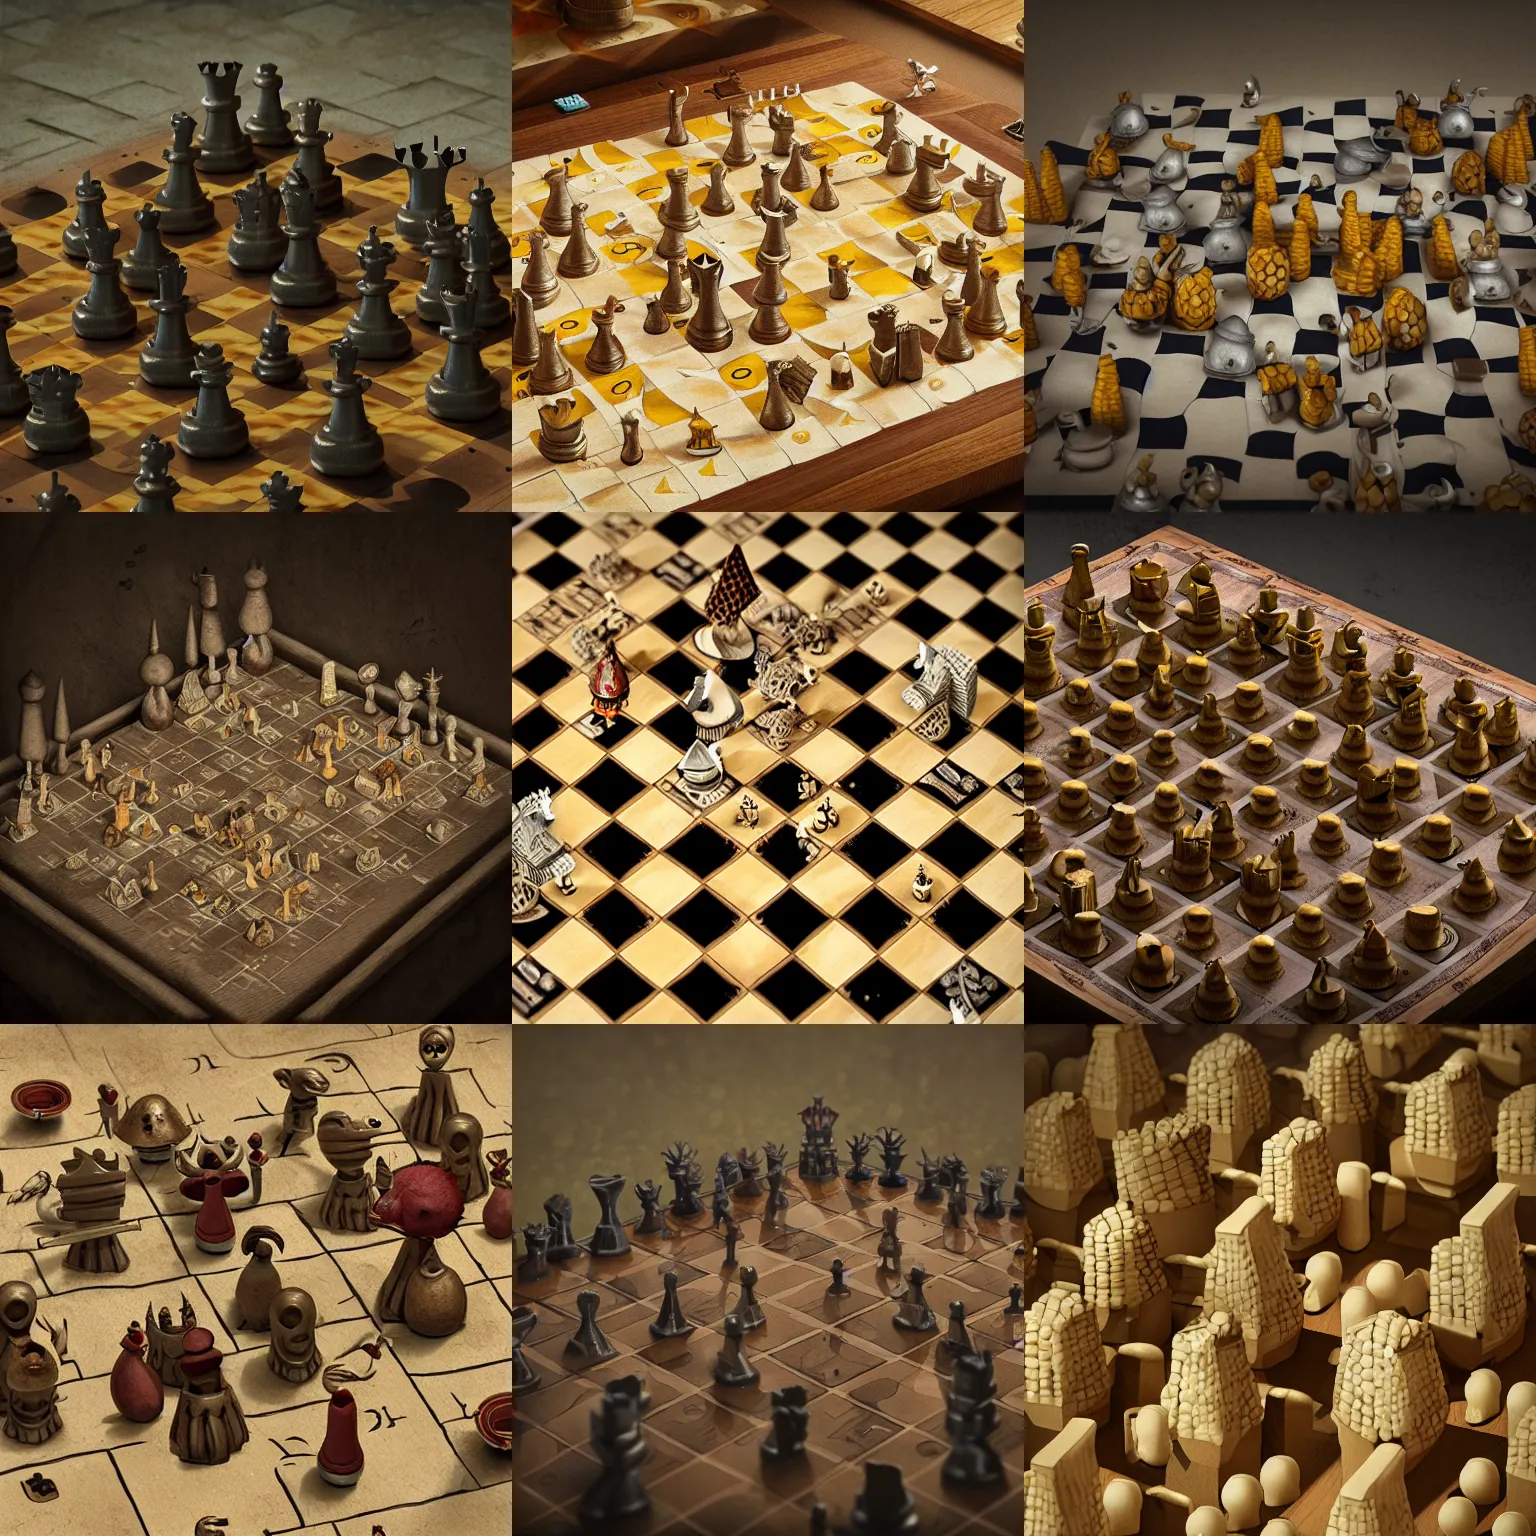 Chessboxing India (@CBOI4) / X